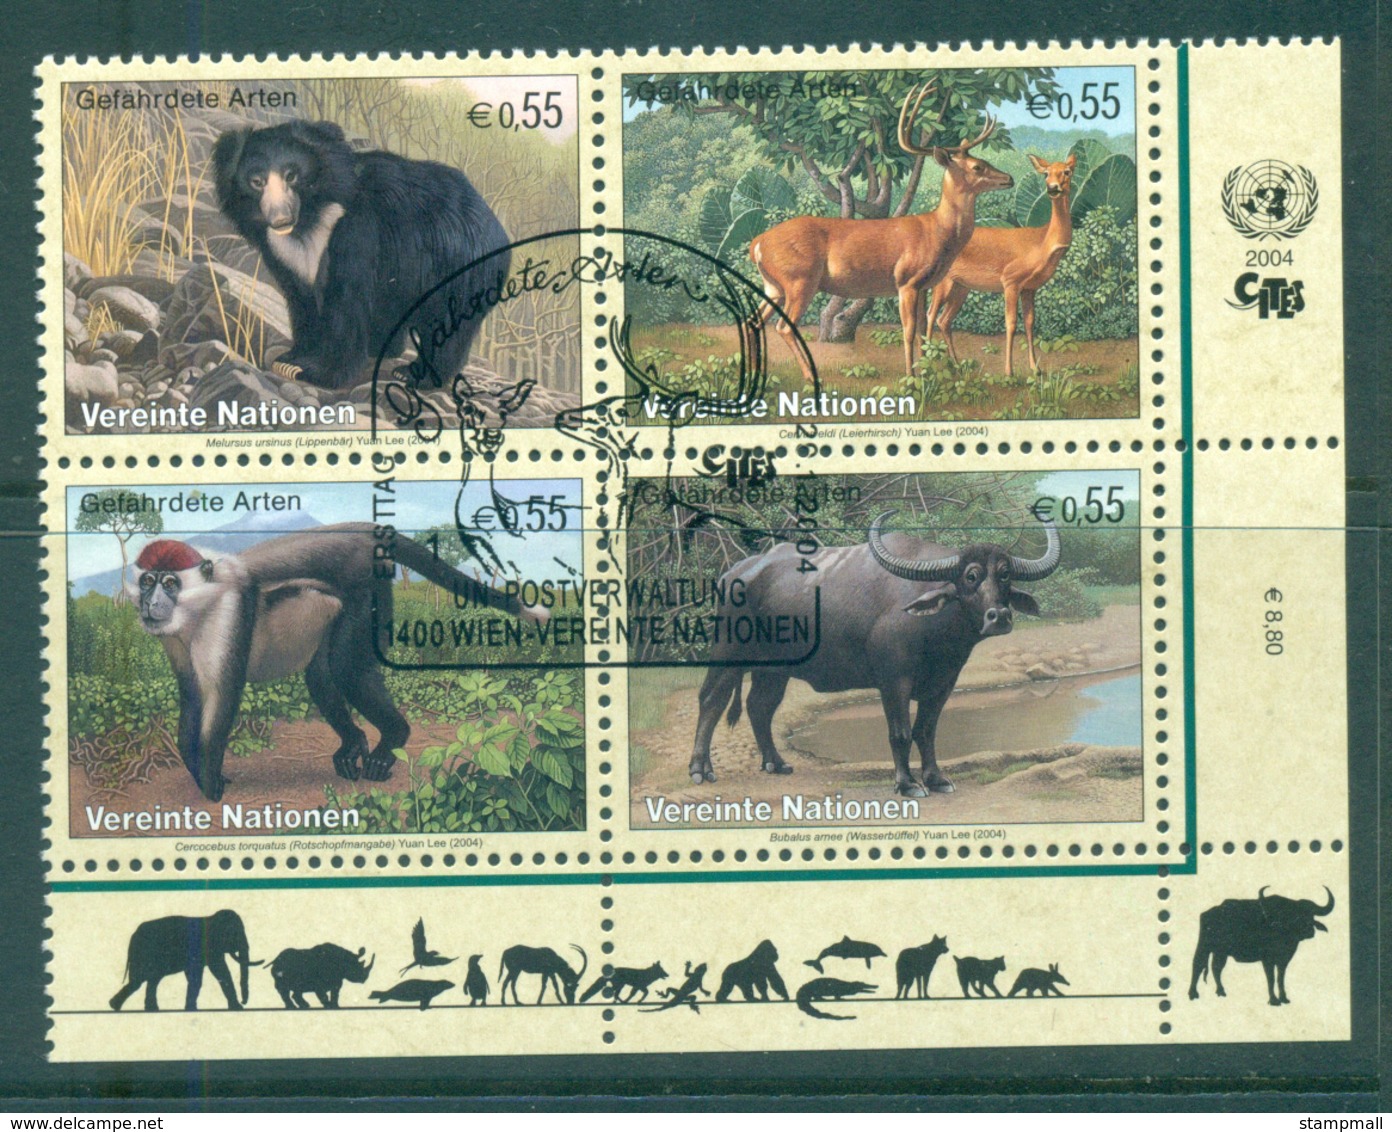 UN Vienna 2004 Endangered Species Blk 4 CTO Lot66075 - Unused Stamps